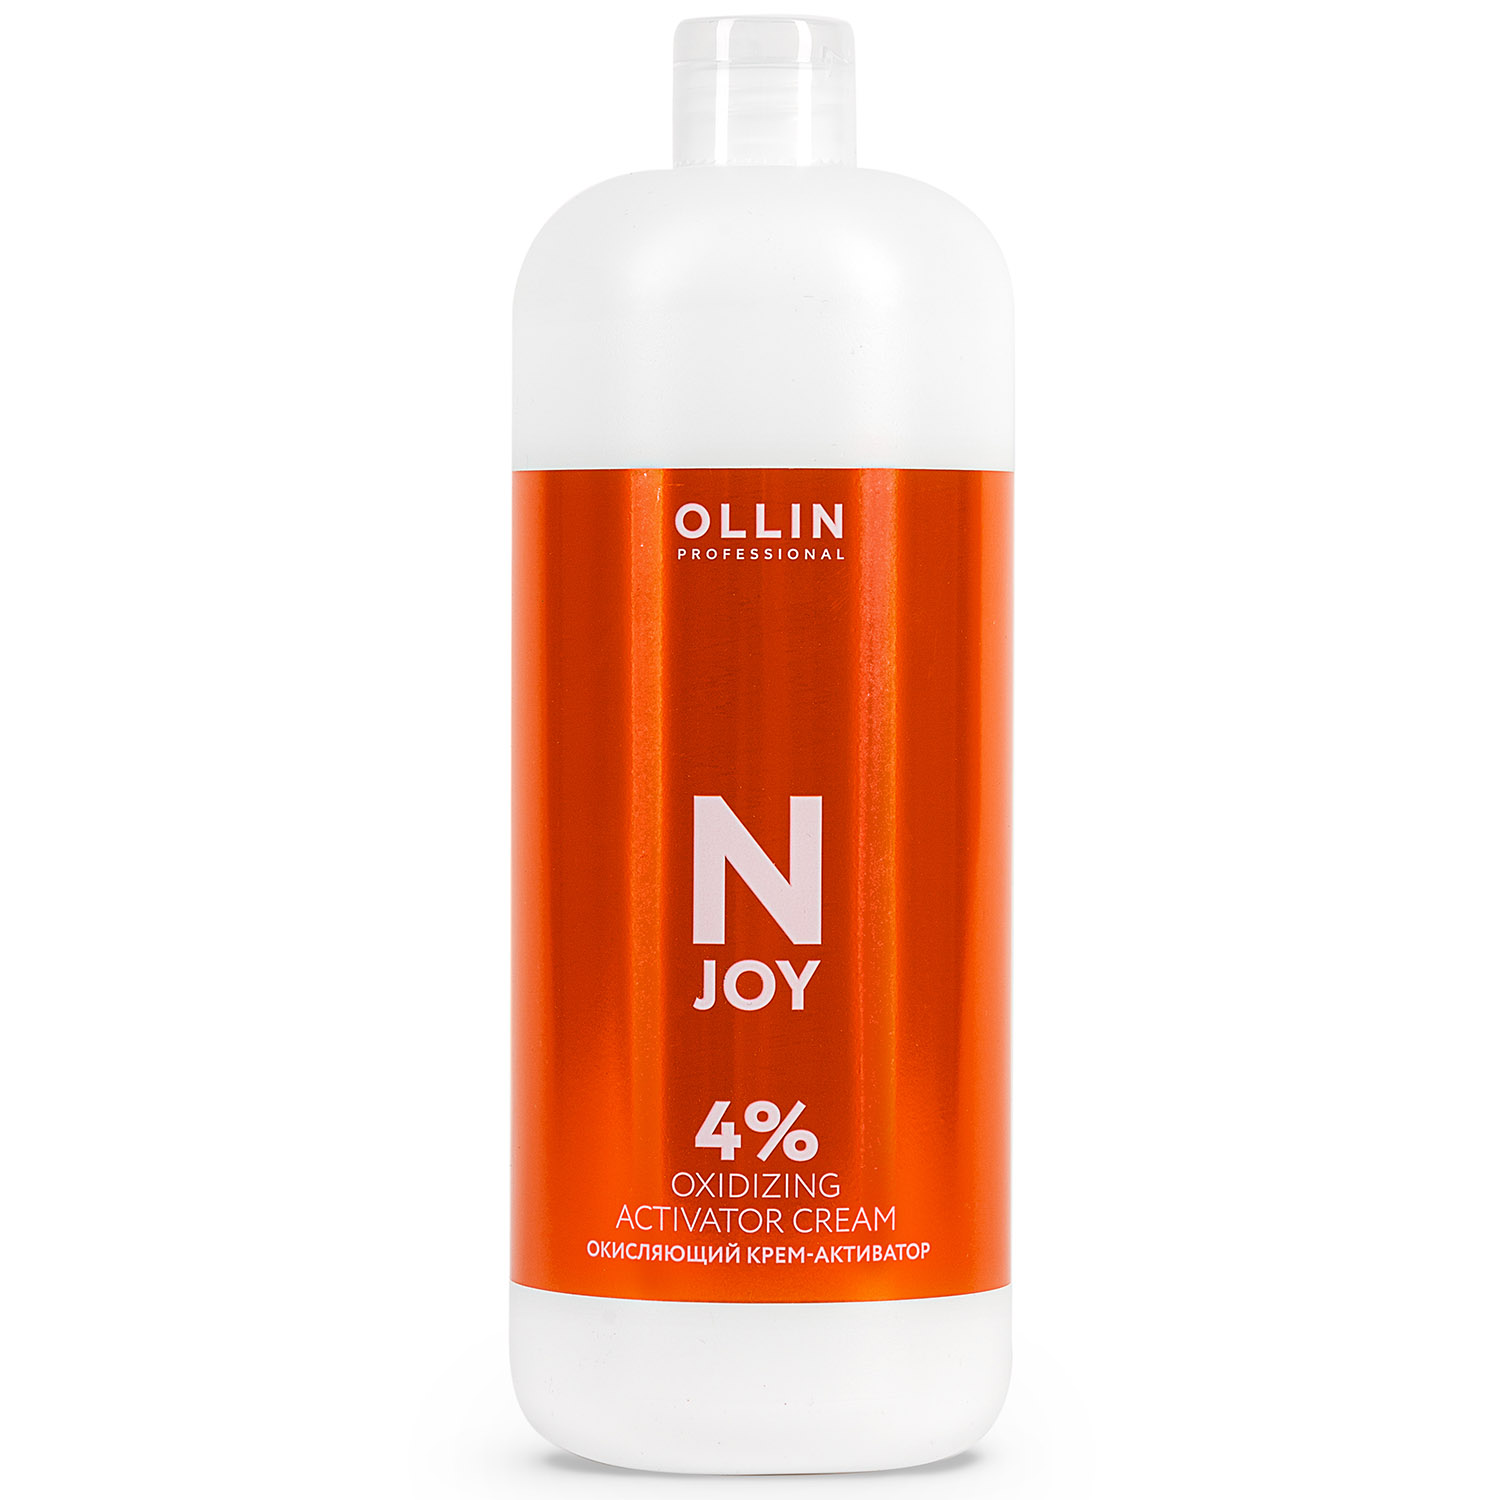 Ollin Professional Окисляющий крем-активатор 4%, 1000 мл (Ollin Professional, N-Joy) окисляющий крем активатор для краски n joy 100мл крем активатор 4%